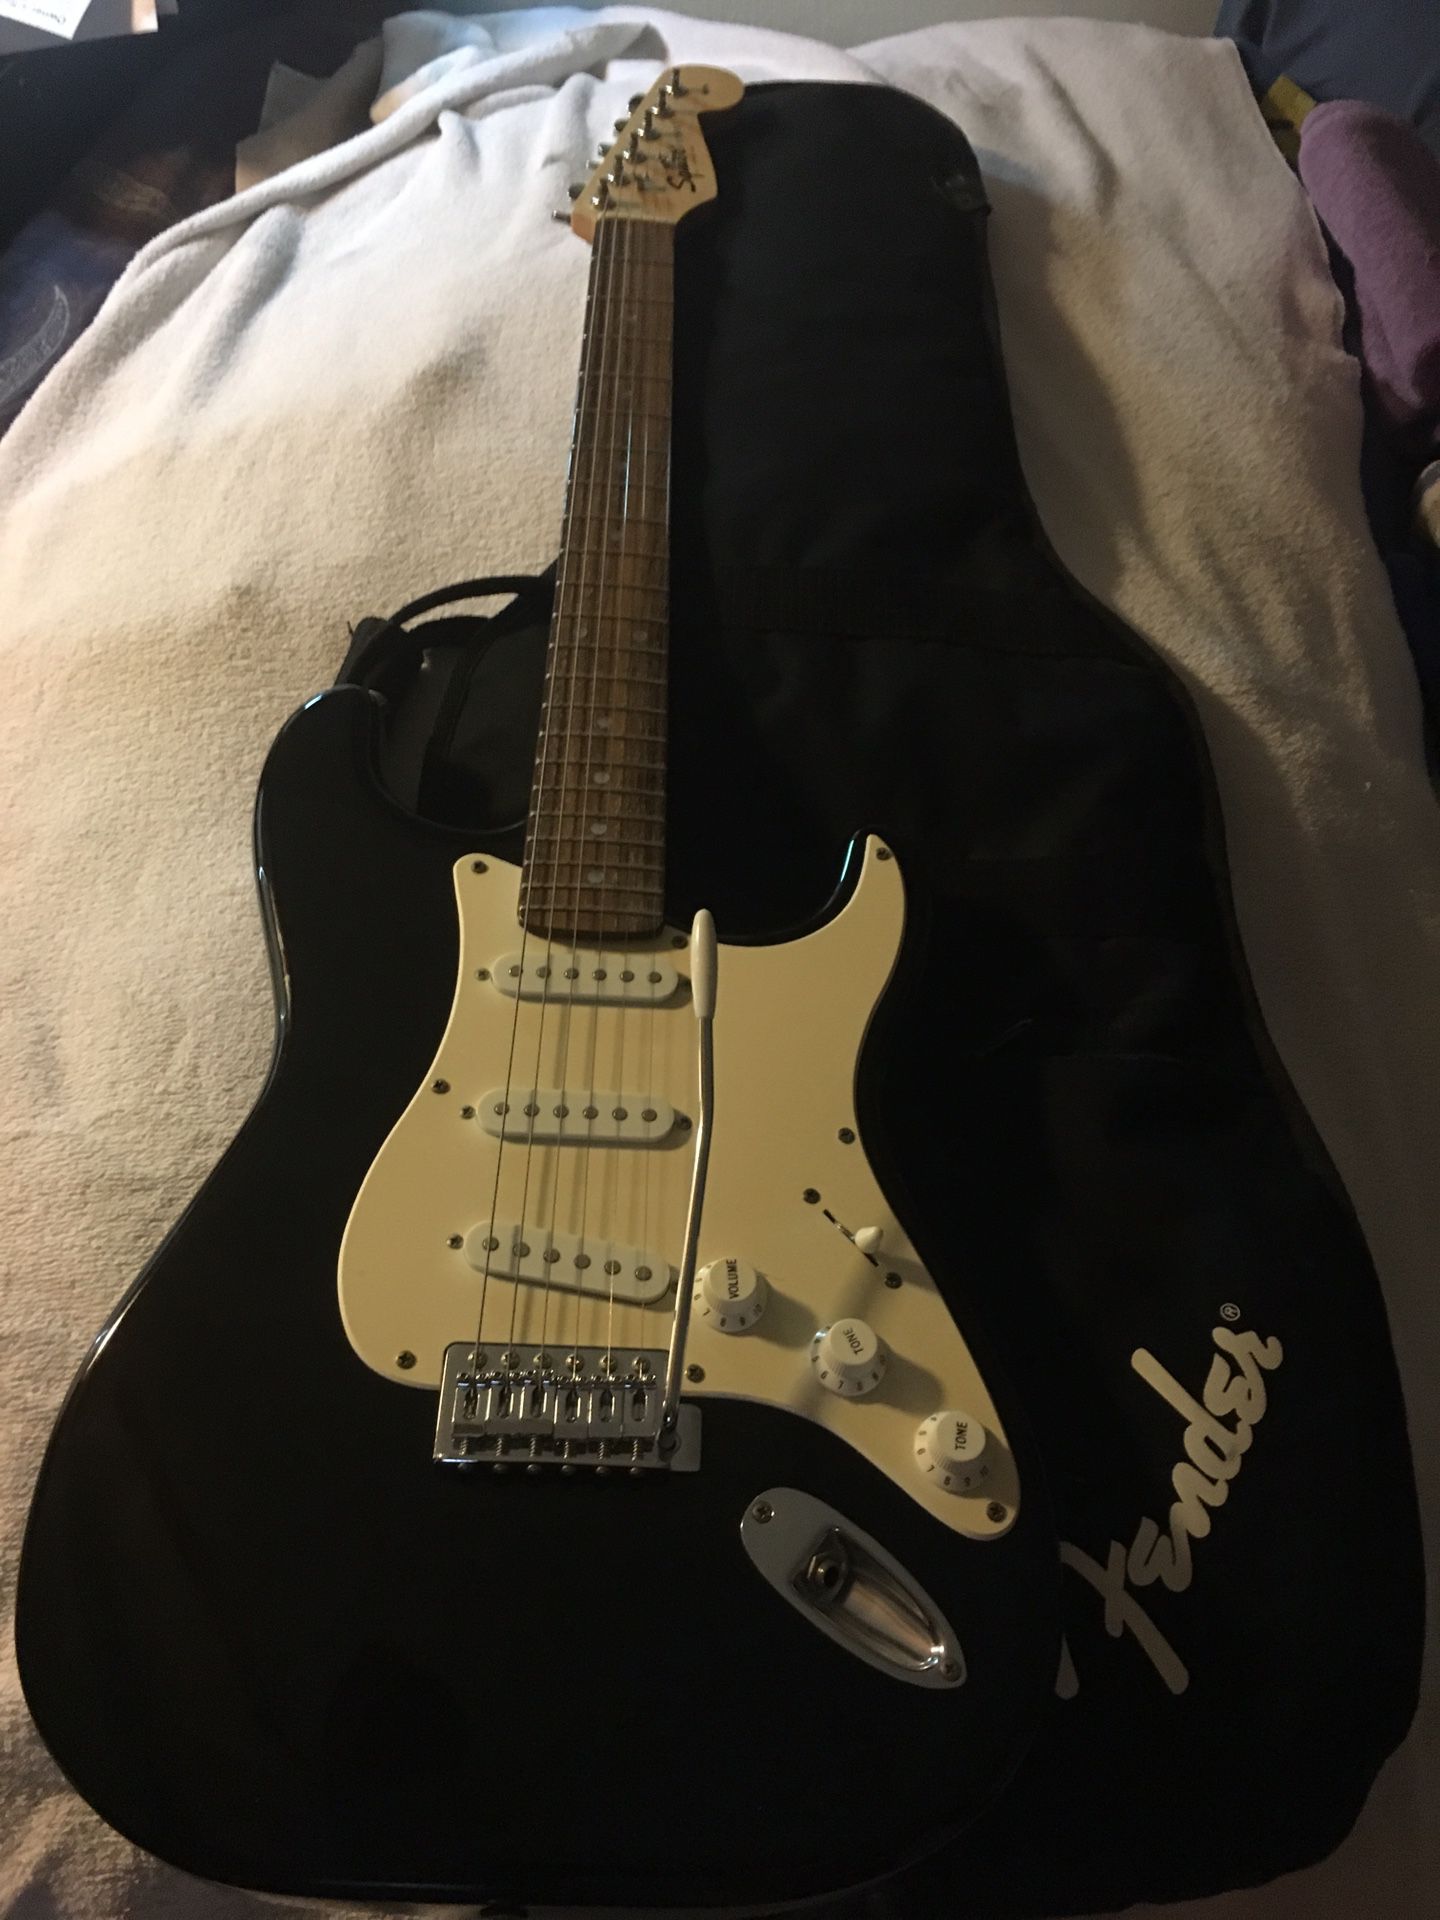 Fender Squire Strat guitar